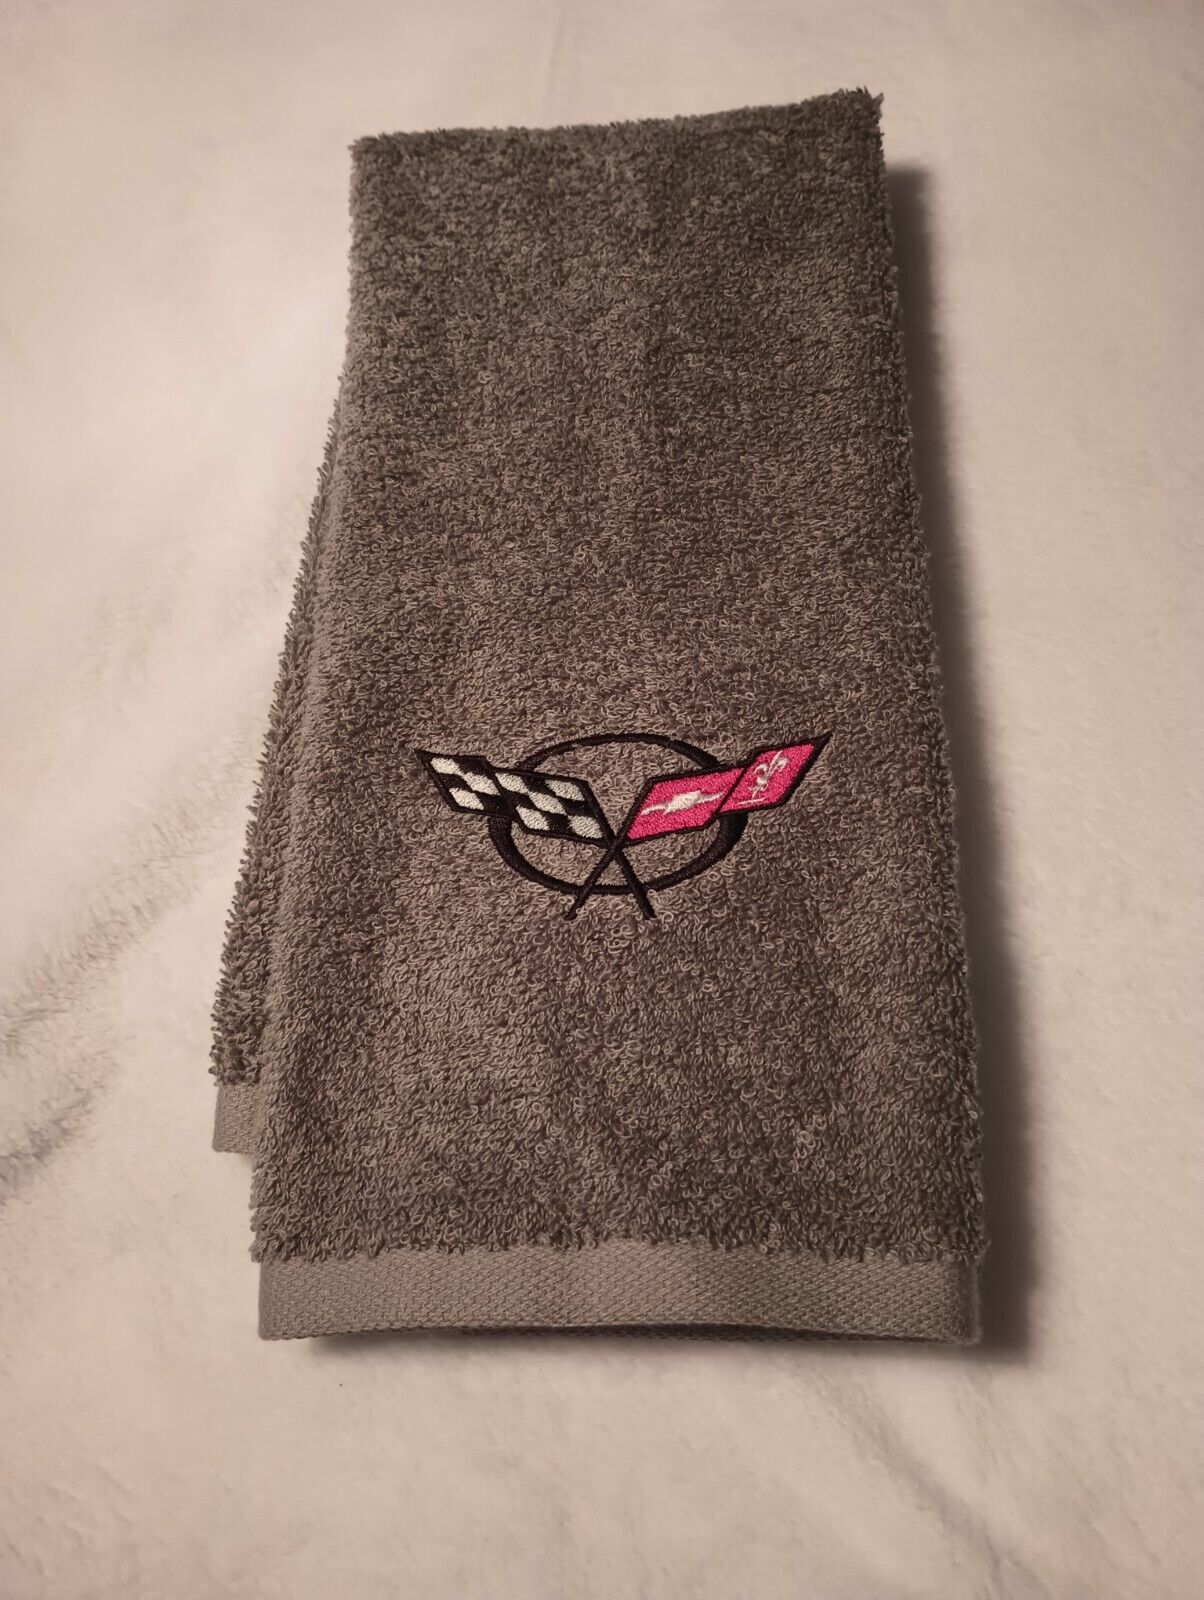 C5 CORVETTE logo / emblem  embroidered on terry cloth hand towel